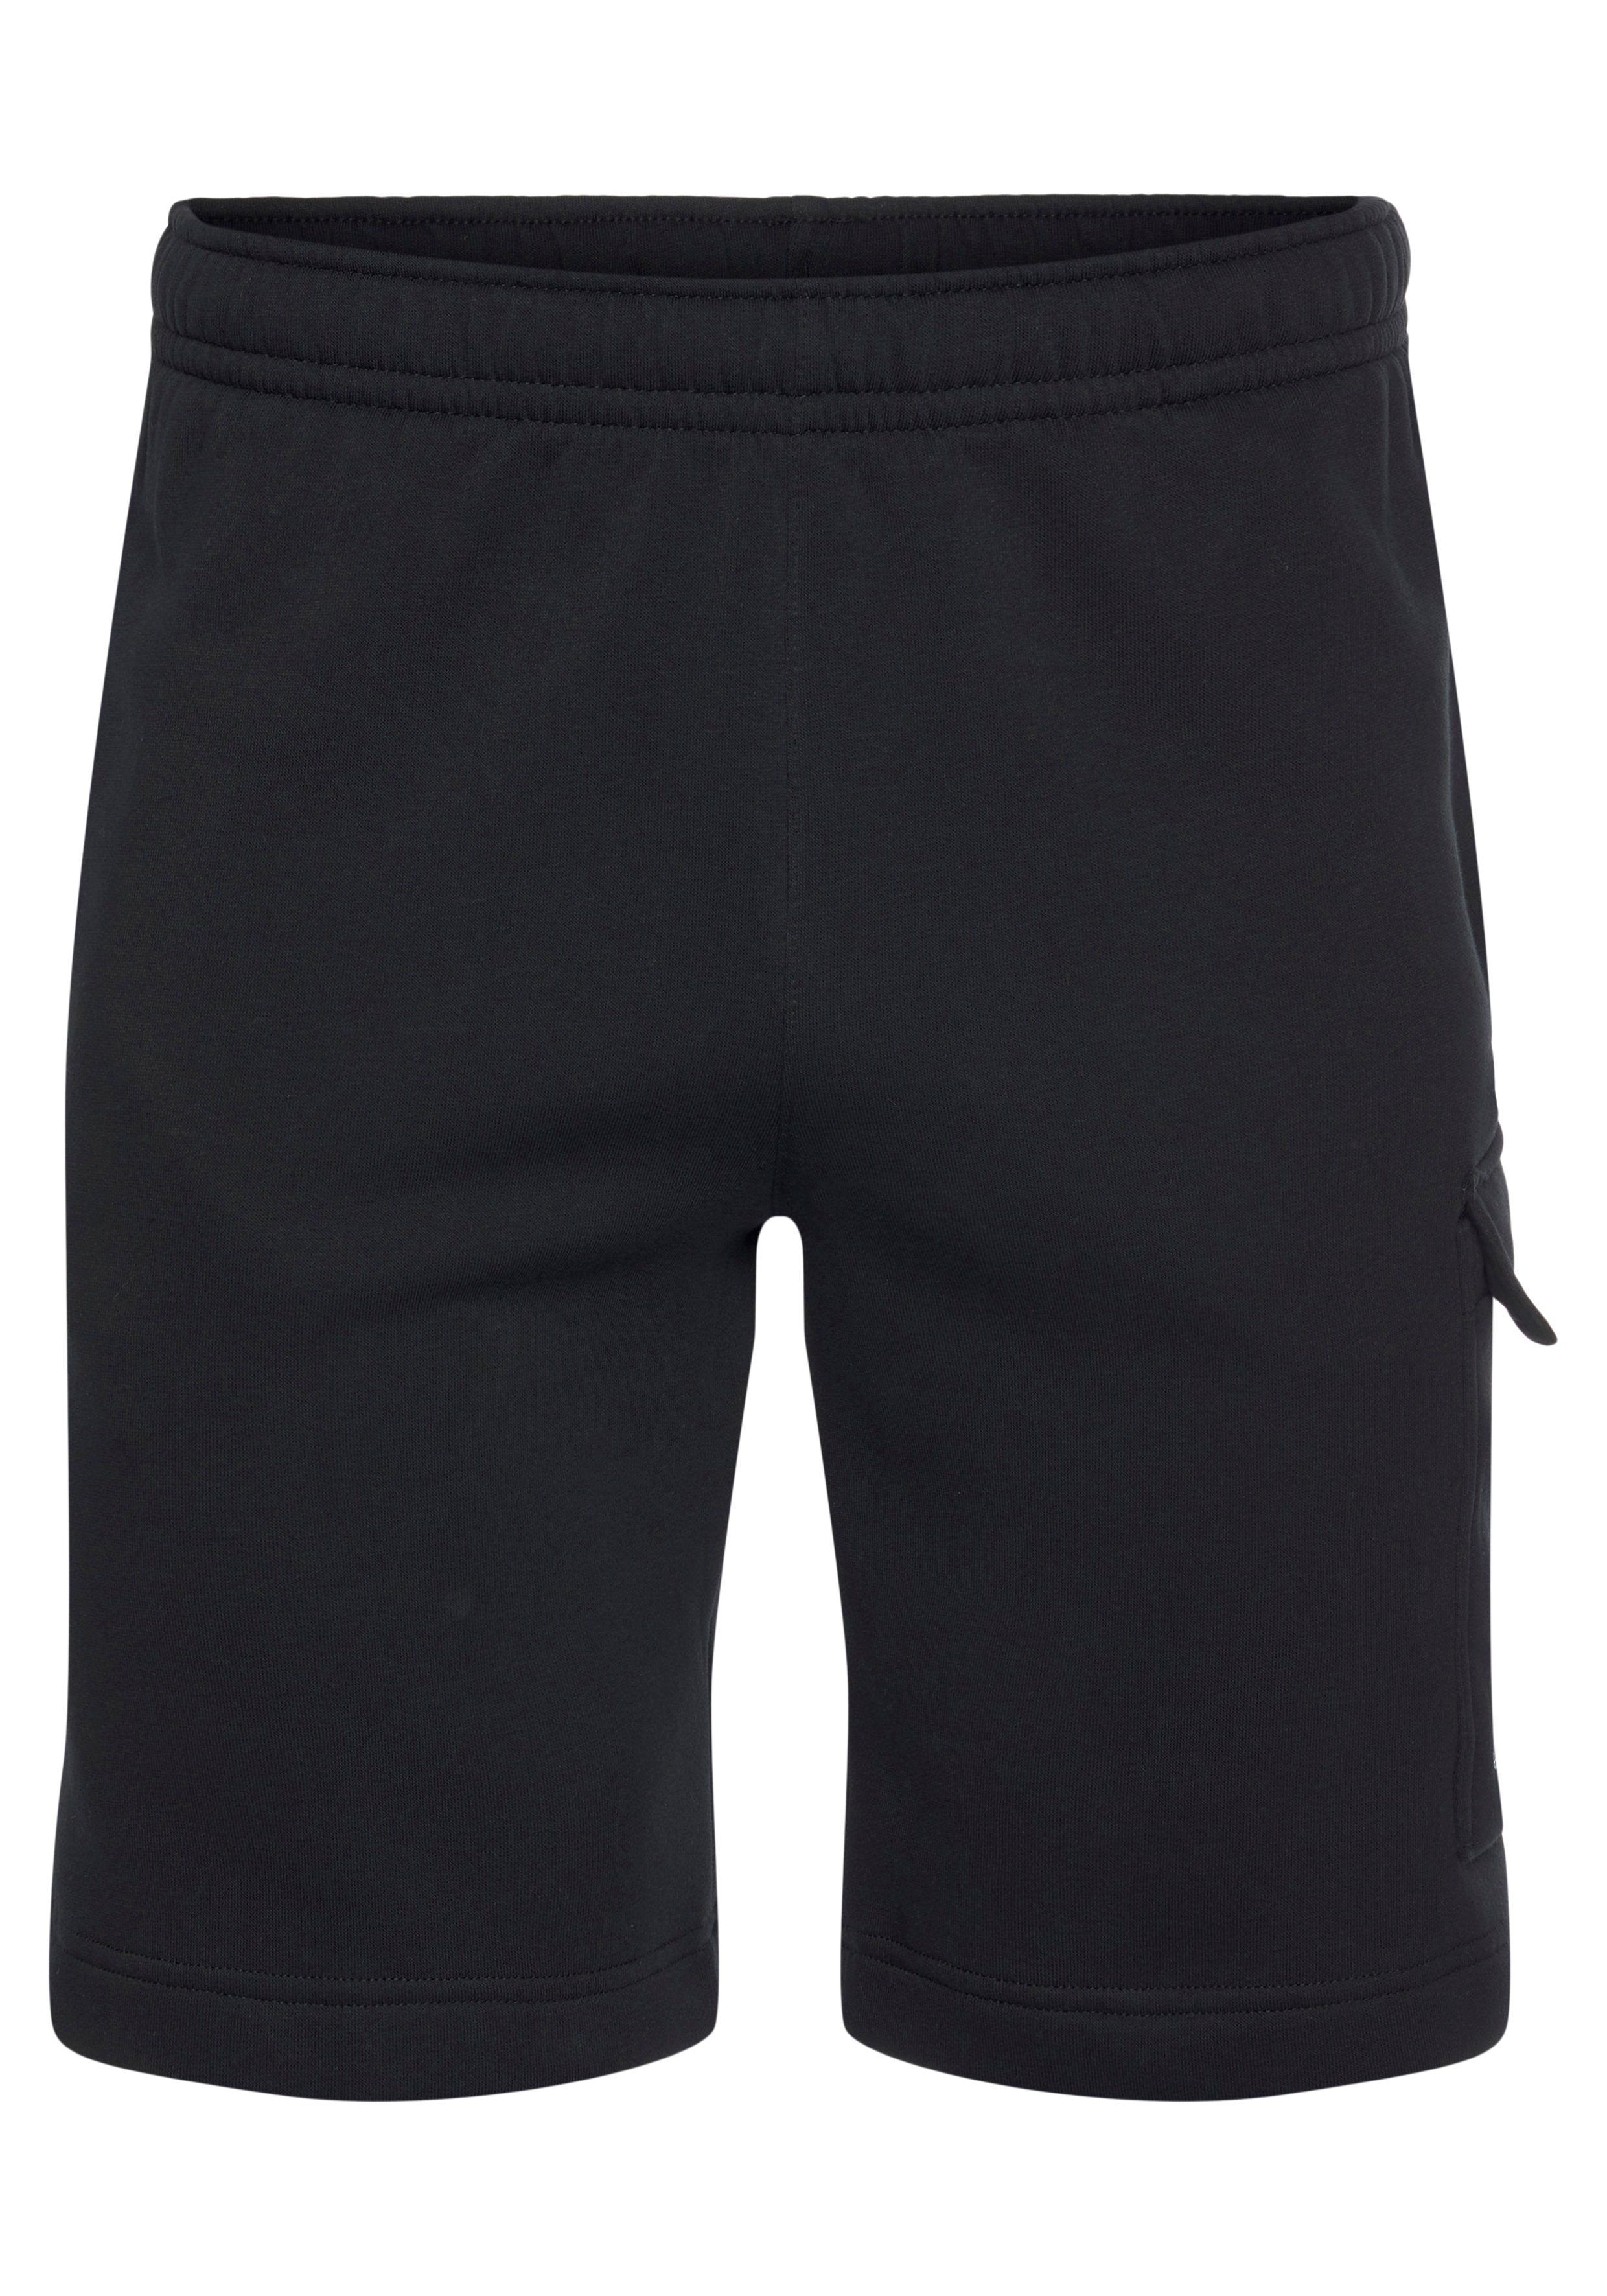 Nike Sportswear Shorts Cargo schwarz Men's Club Shorts